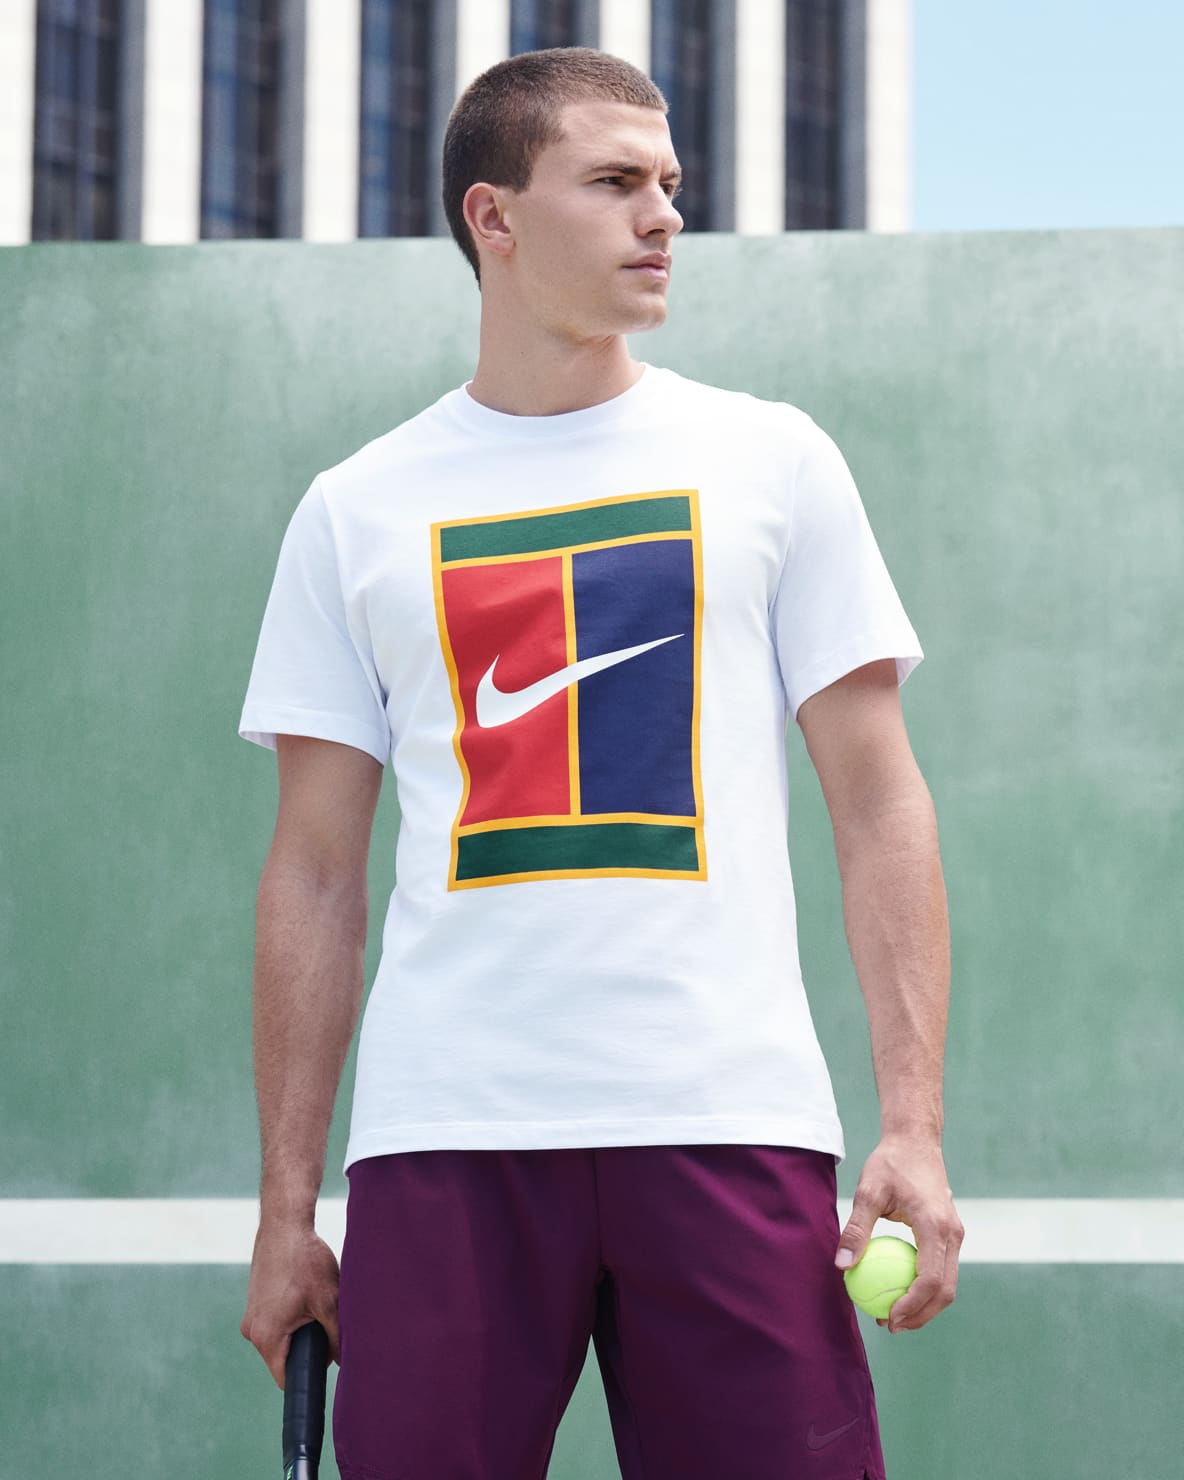 New men's sports Tops tennis/Table tennis clothes set T shirts+shorts Hot 